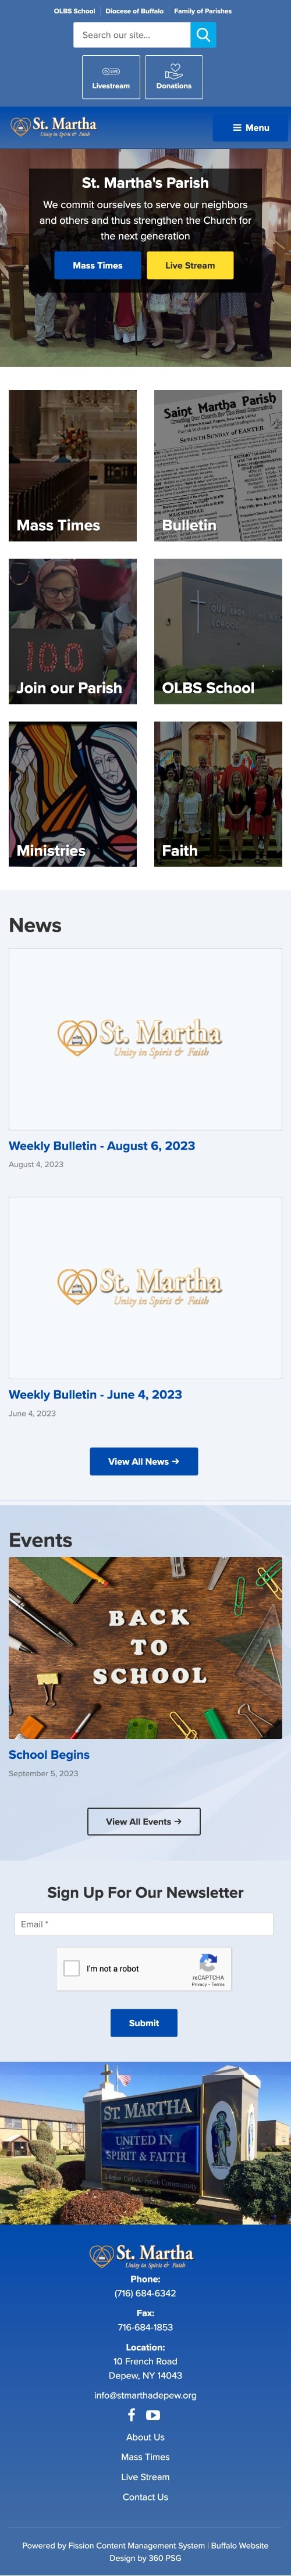 St. Martha's Parish Website - Mobile